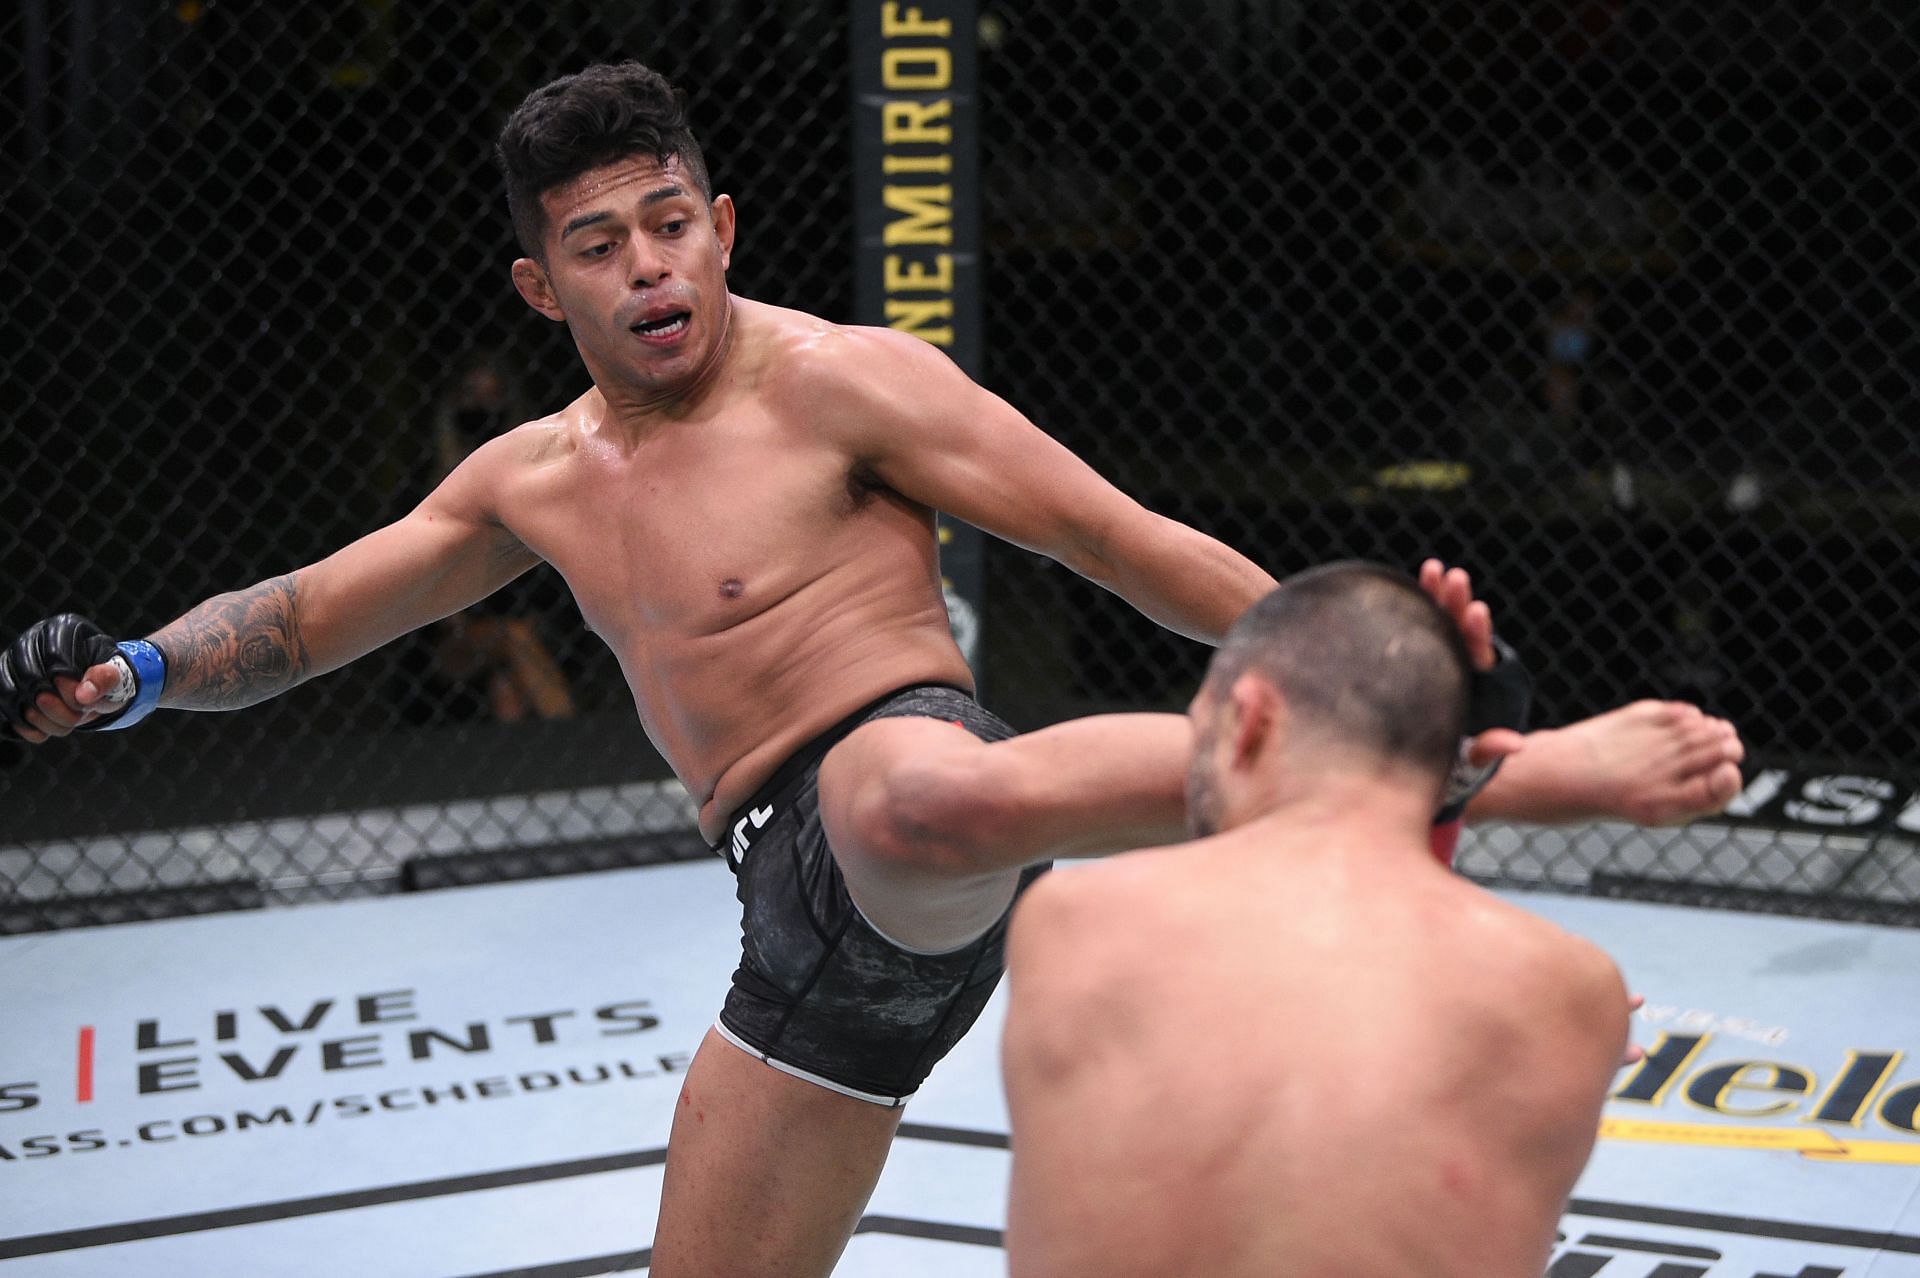 UFC Fight Night: Martinez kicking Saenz